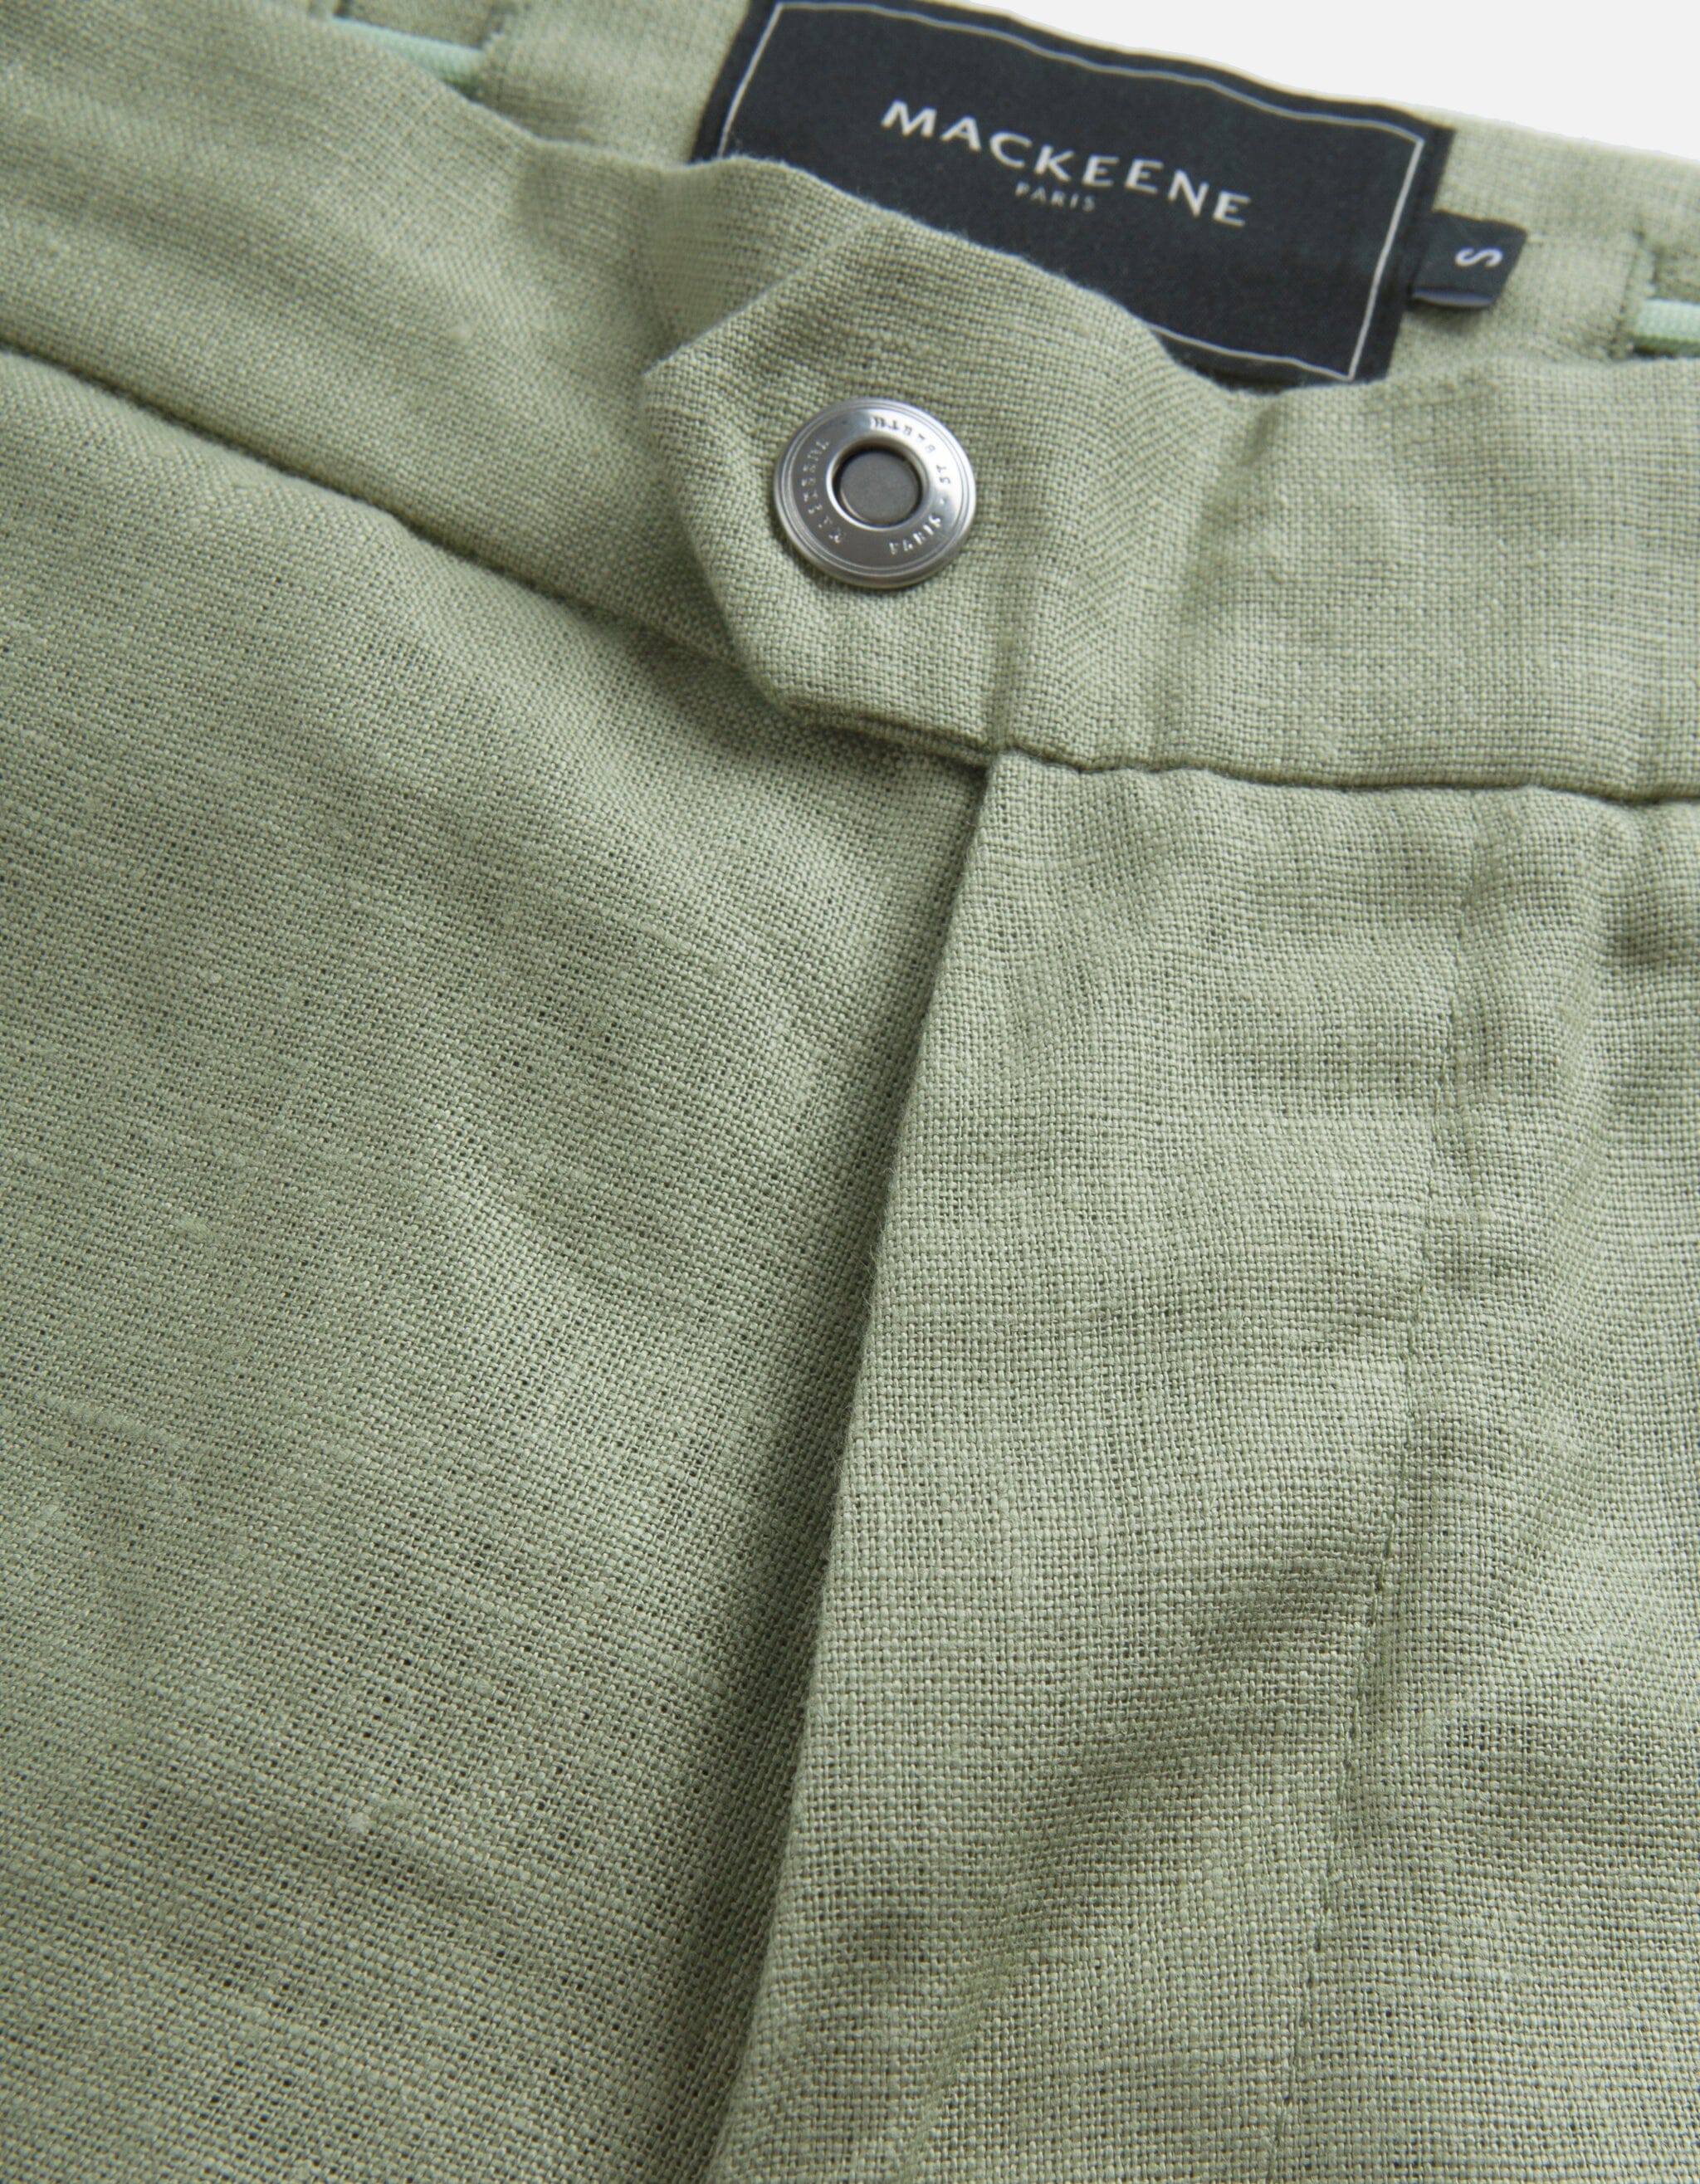 Todd - 04. Green Olive Shorts - Todd MACKEENE 